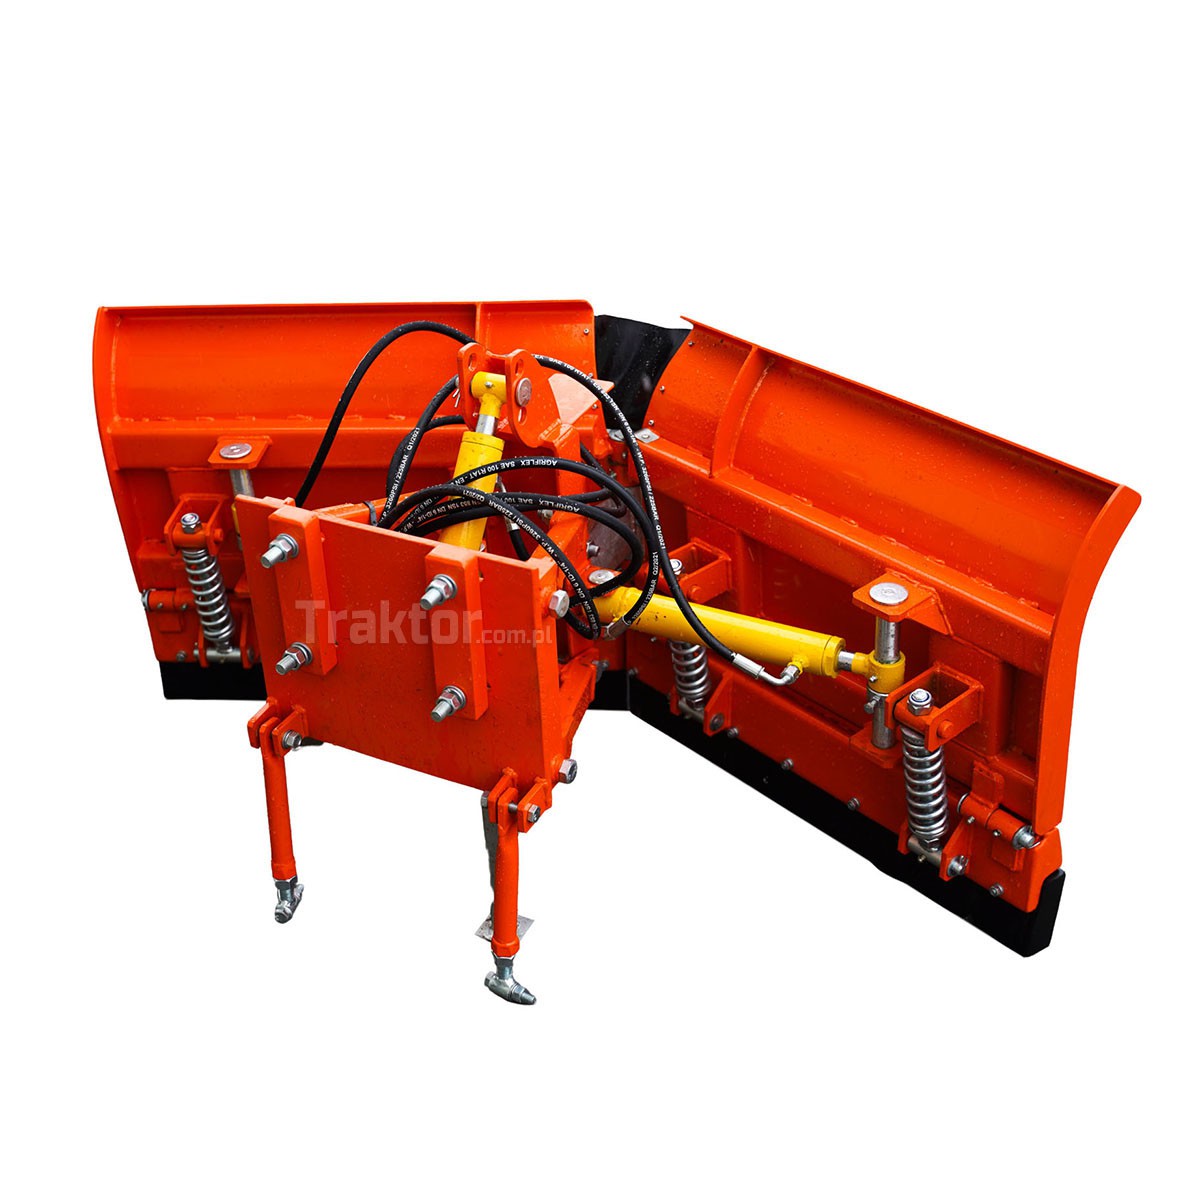 Arrow snow plow 150 cm, hydraulic, with 4FARMER mounting plate